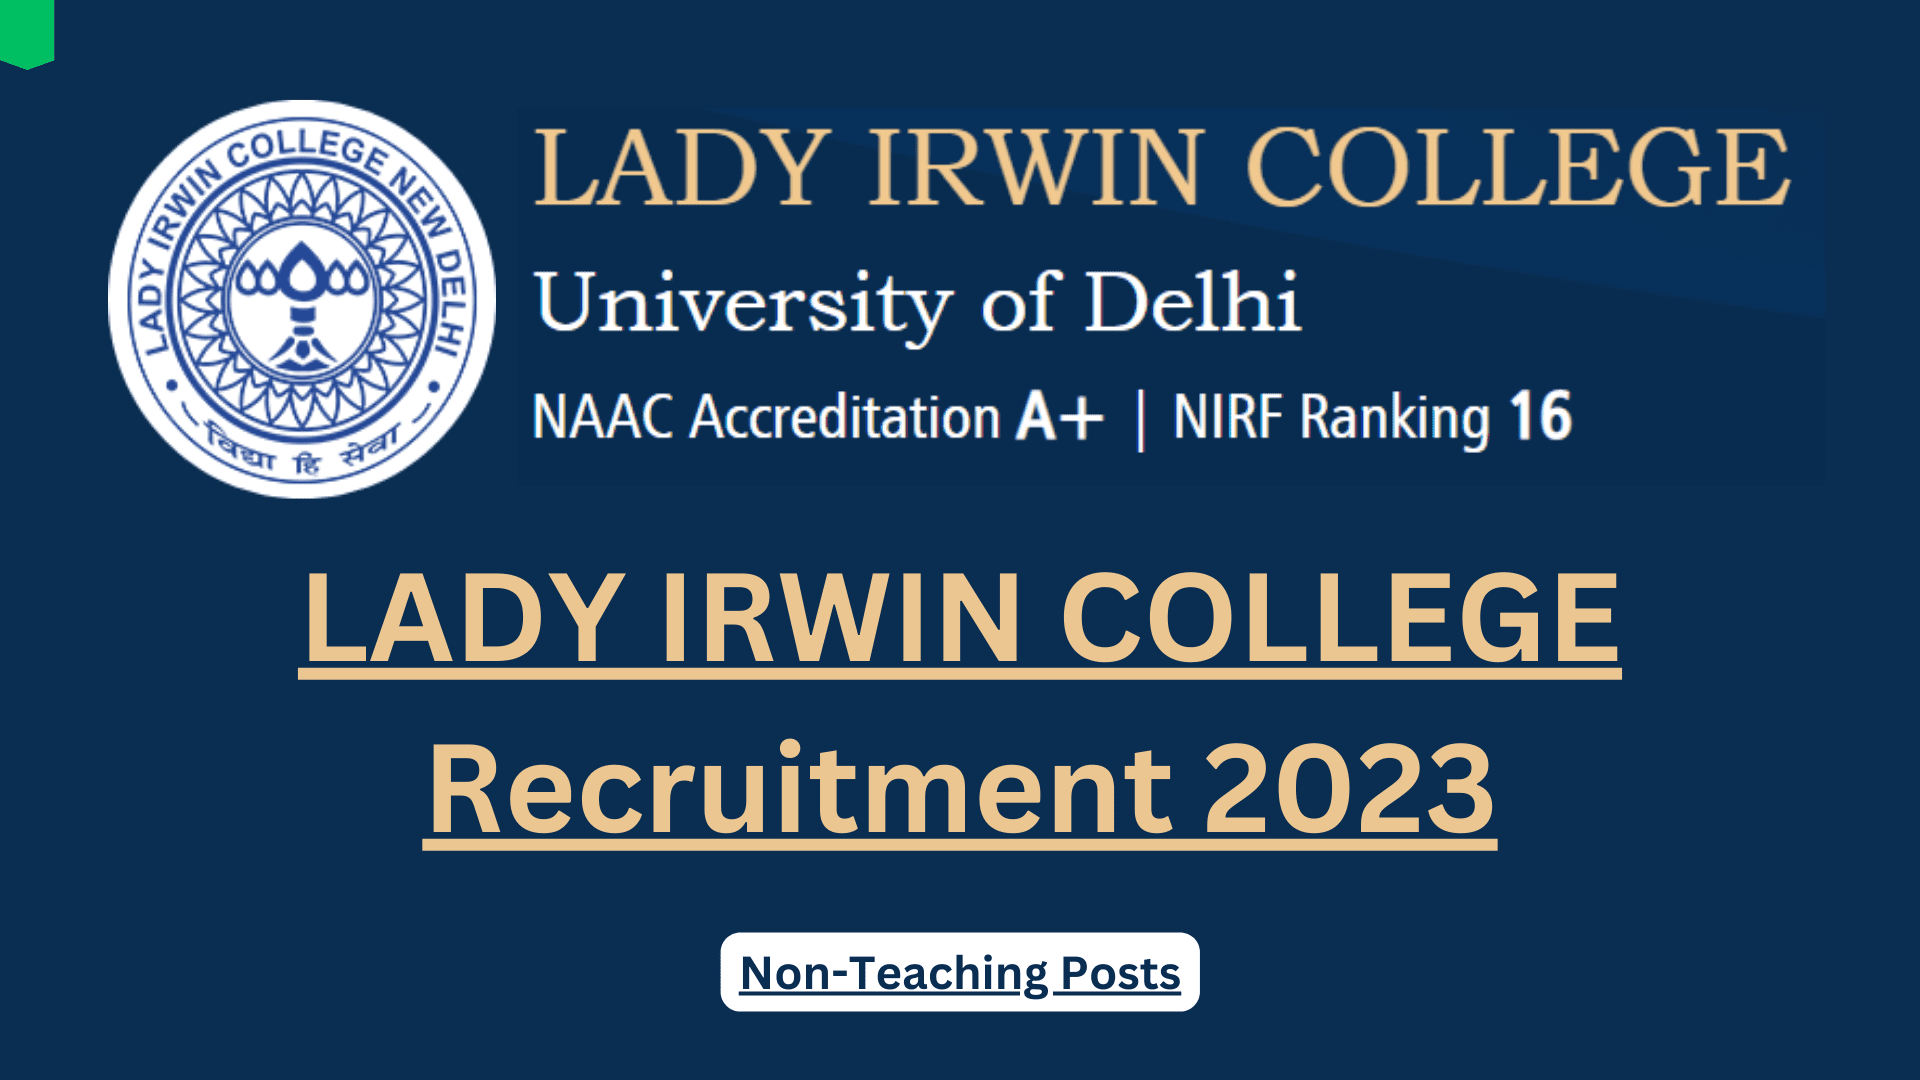 Lady Irwin College Non-Teaching Recruitment 2023